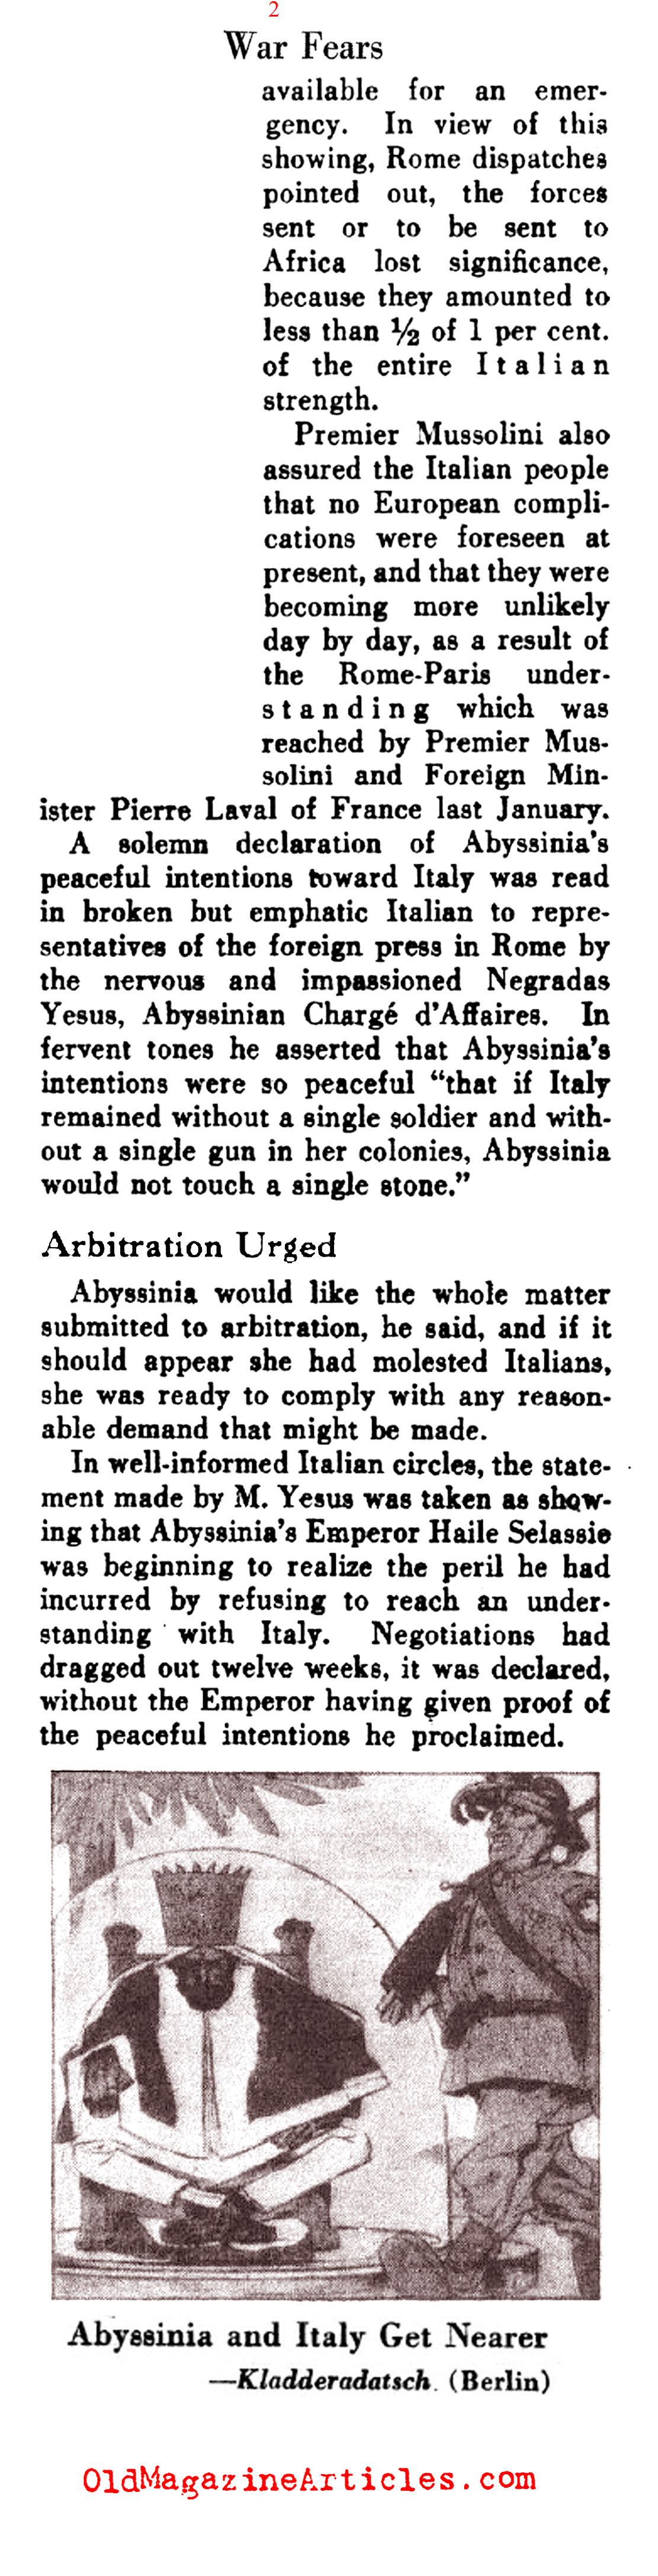 ''War Fears in Italo-Ethiopia Rift'' (Literary Digest, 1935)